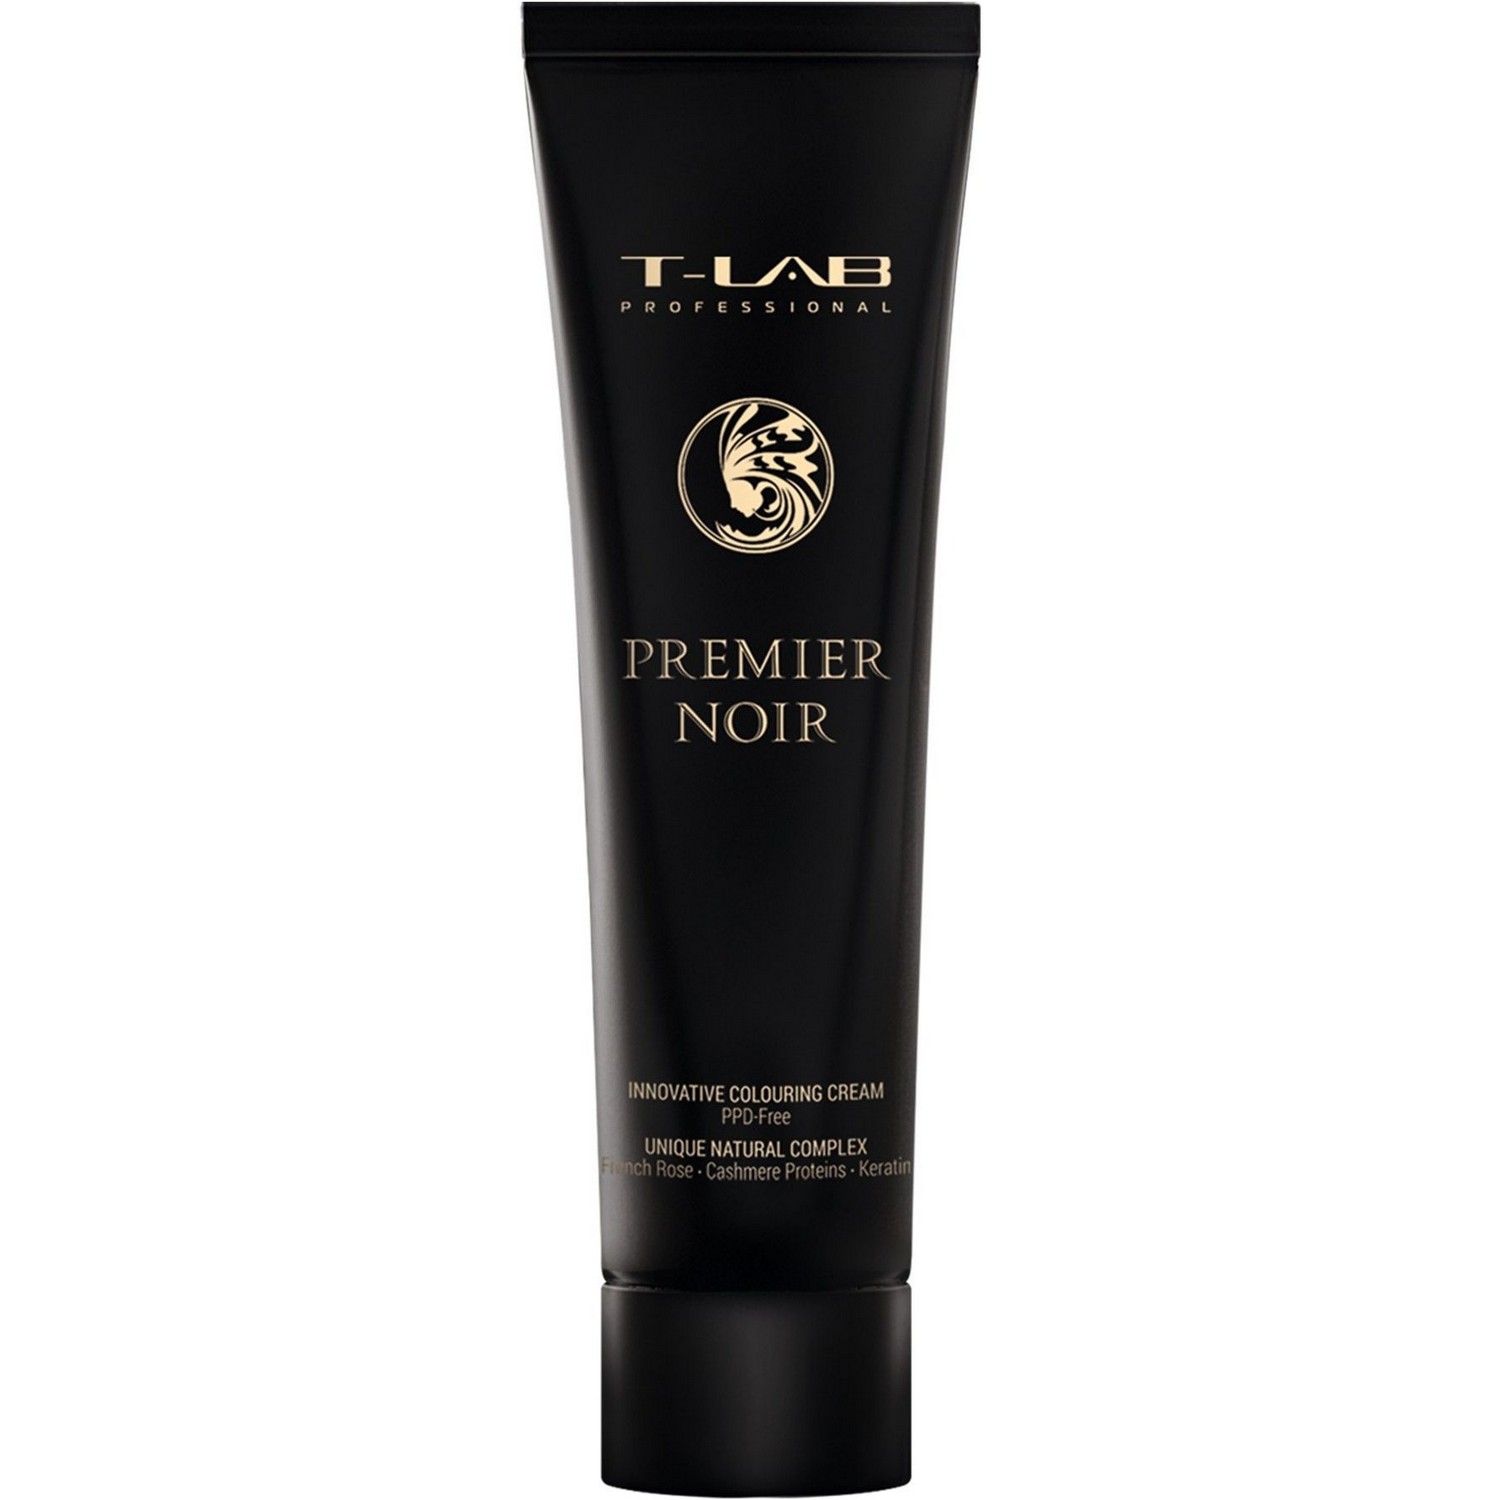 Крем-фарба T-LAB Professional Premier Noir colouring cream, відтінок 4.62 (extra red iridescent brow) - фото 1